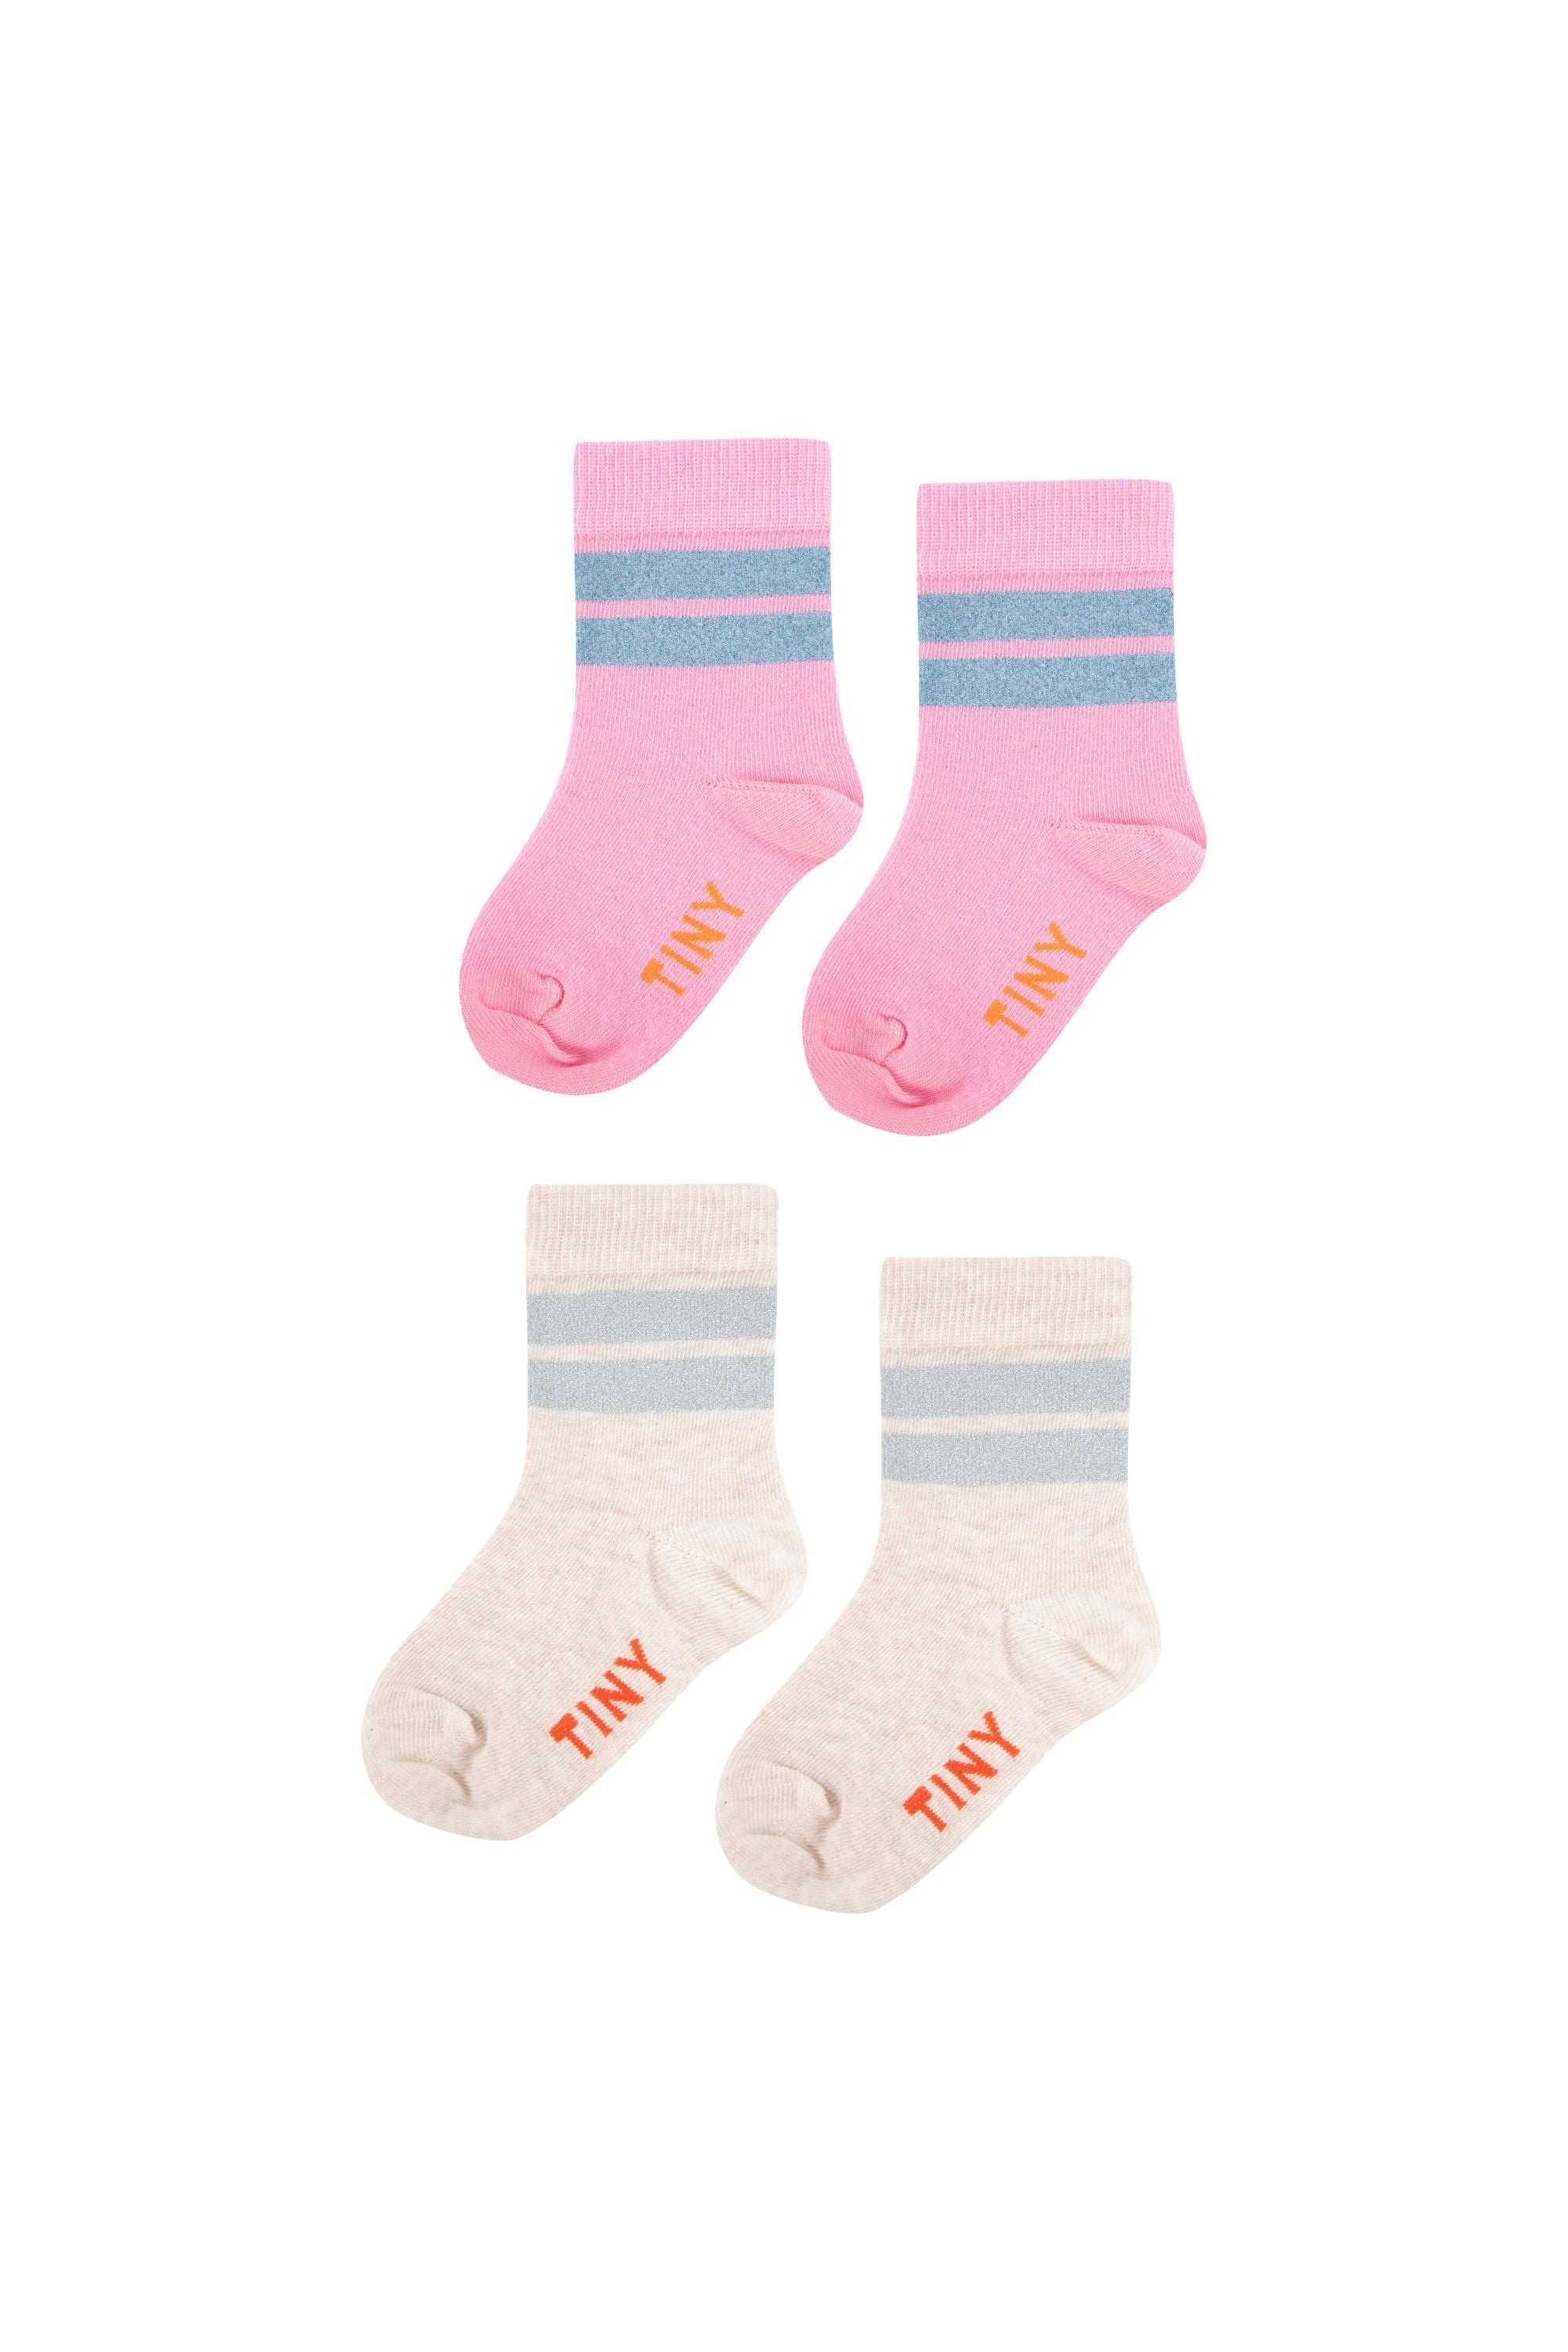 tiny cottons stripes socks packs - peach / cream melange